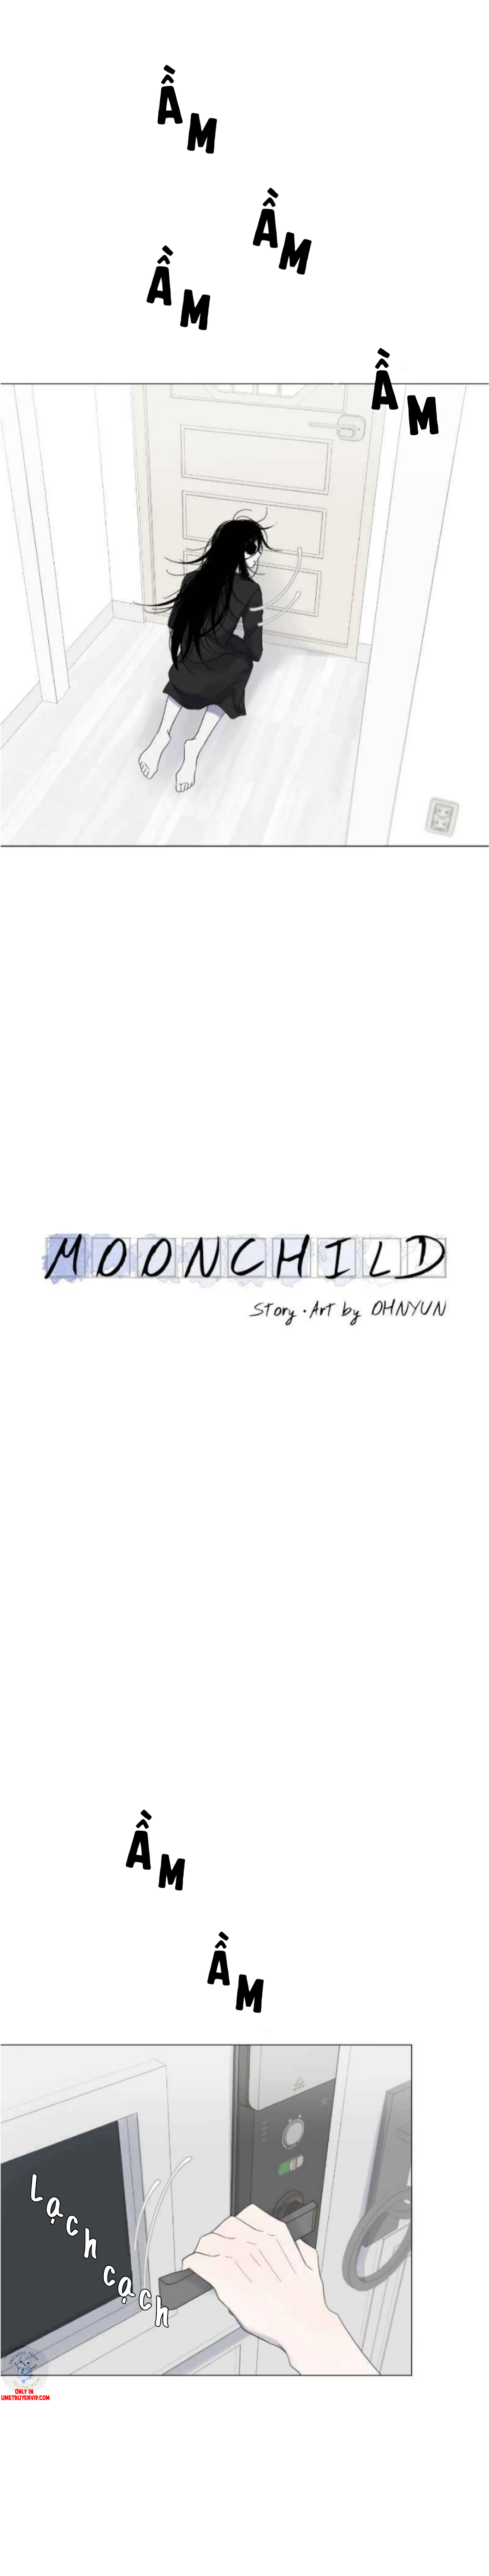 moonchild-chap-21-1